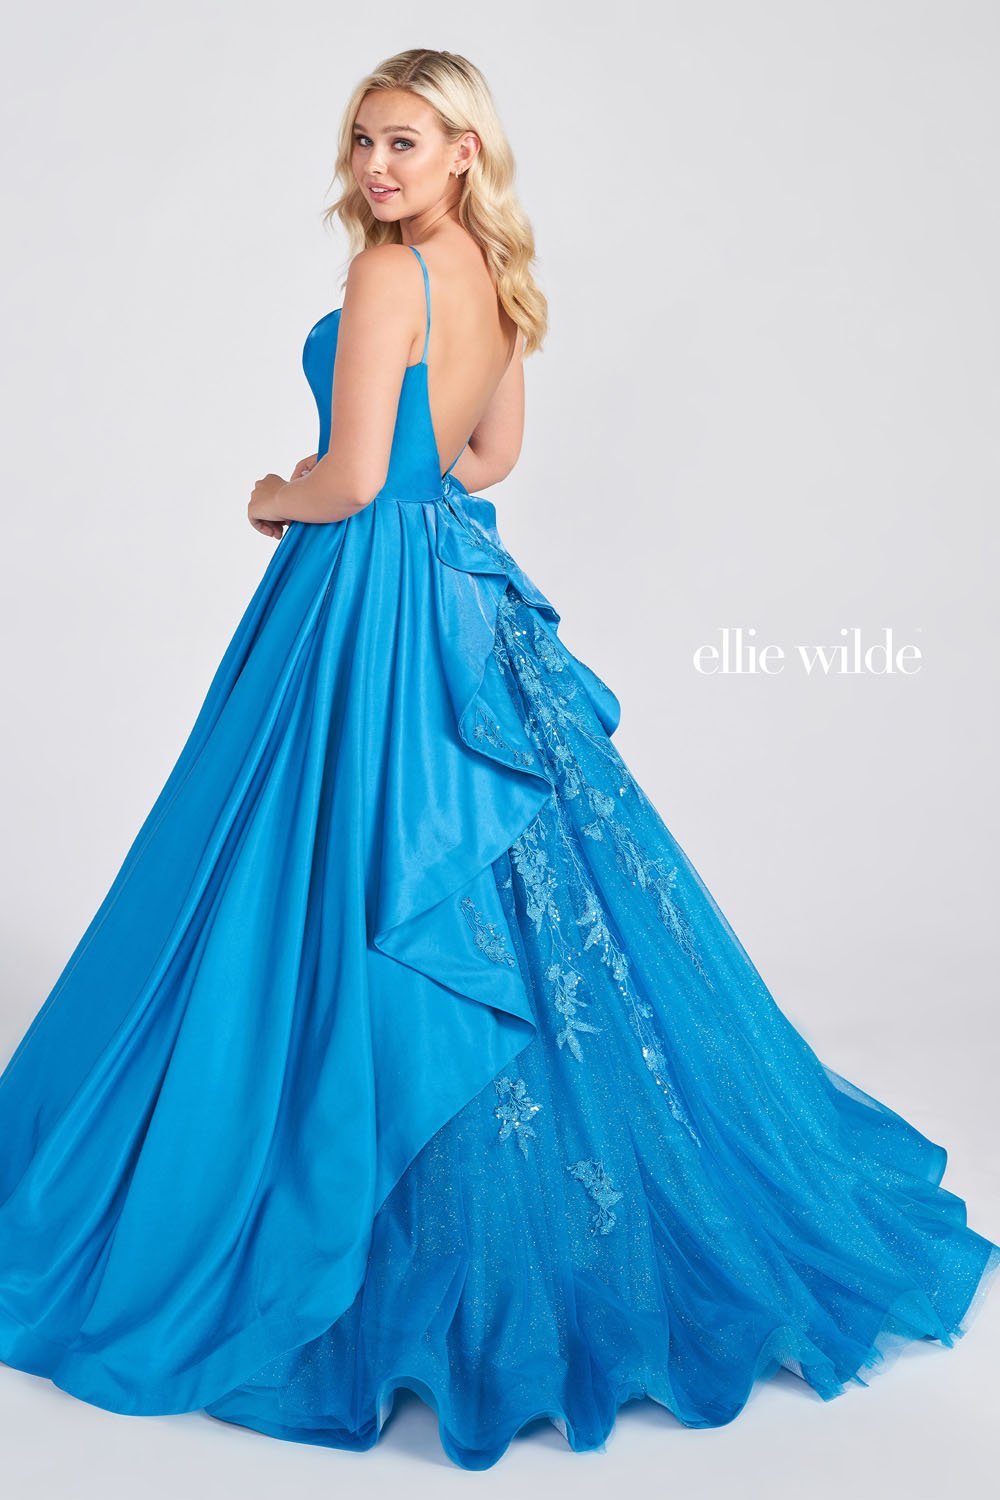 Ellie Wilde Ocean Blue EW122046 Prom Dress Image.  Ocean Blue formal dress.